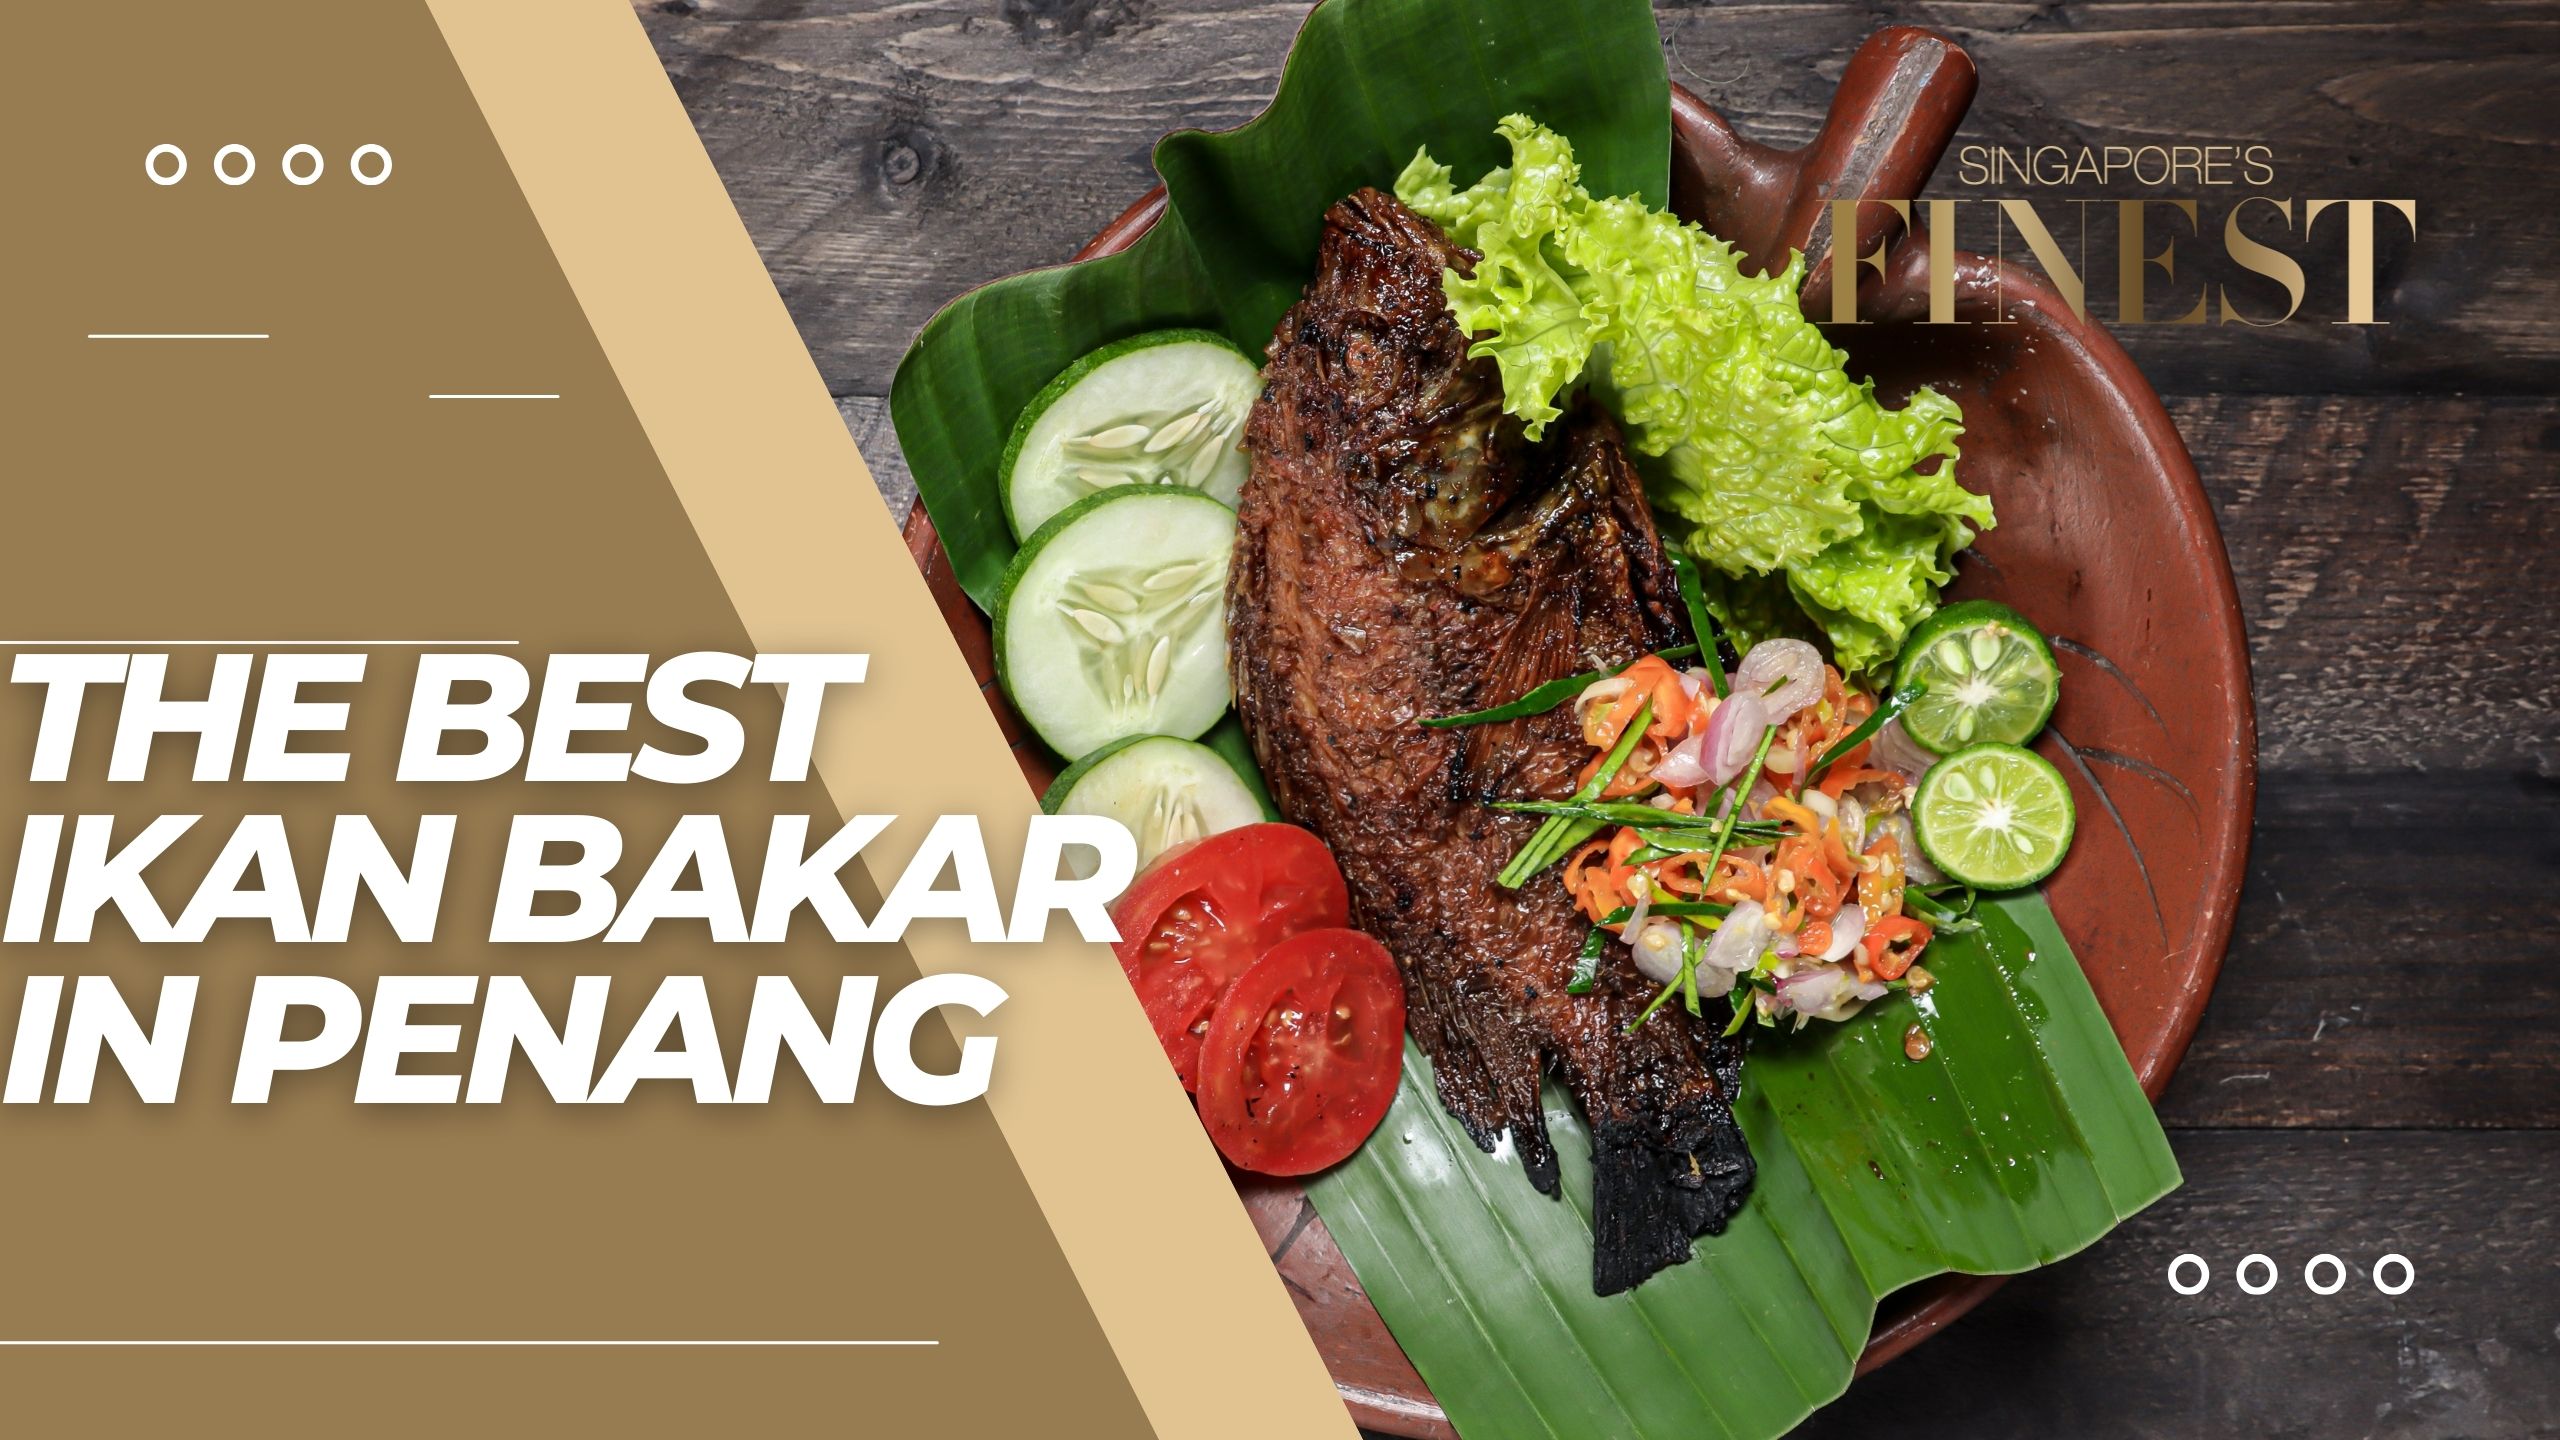 The Finest Ikan Bakar in Penang